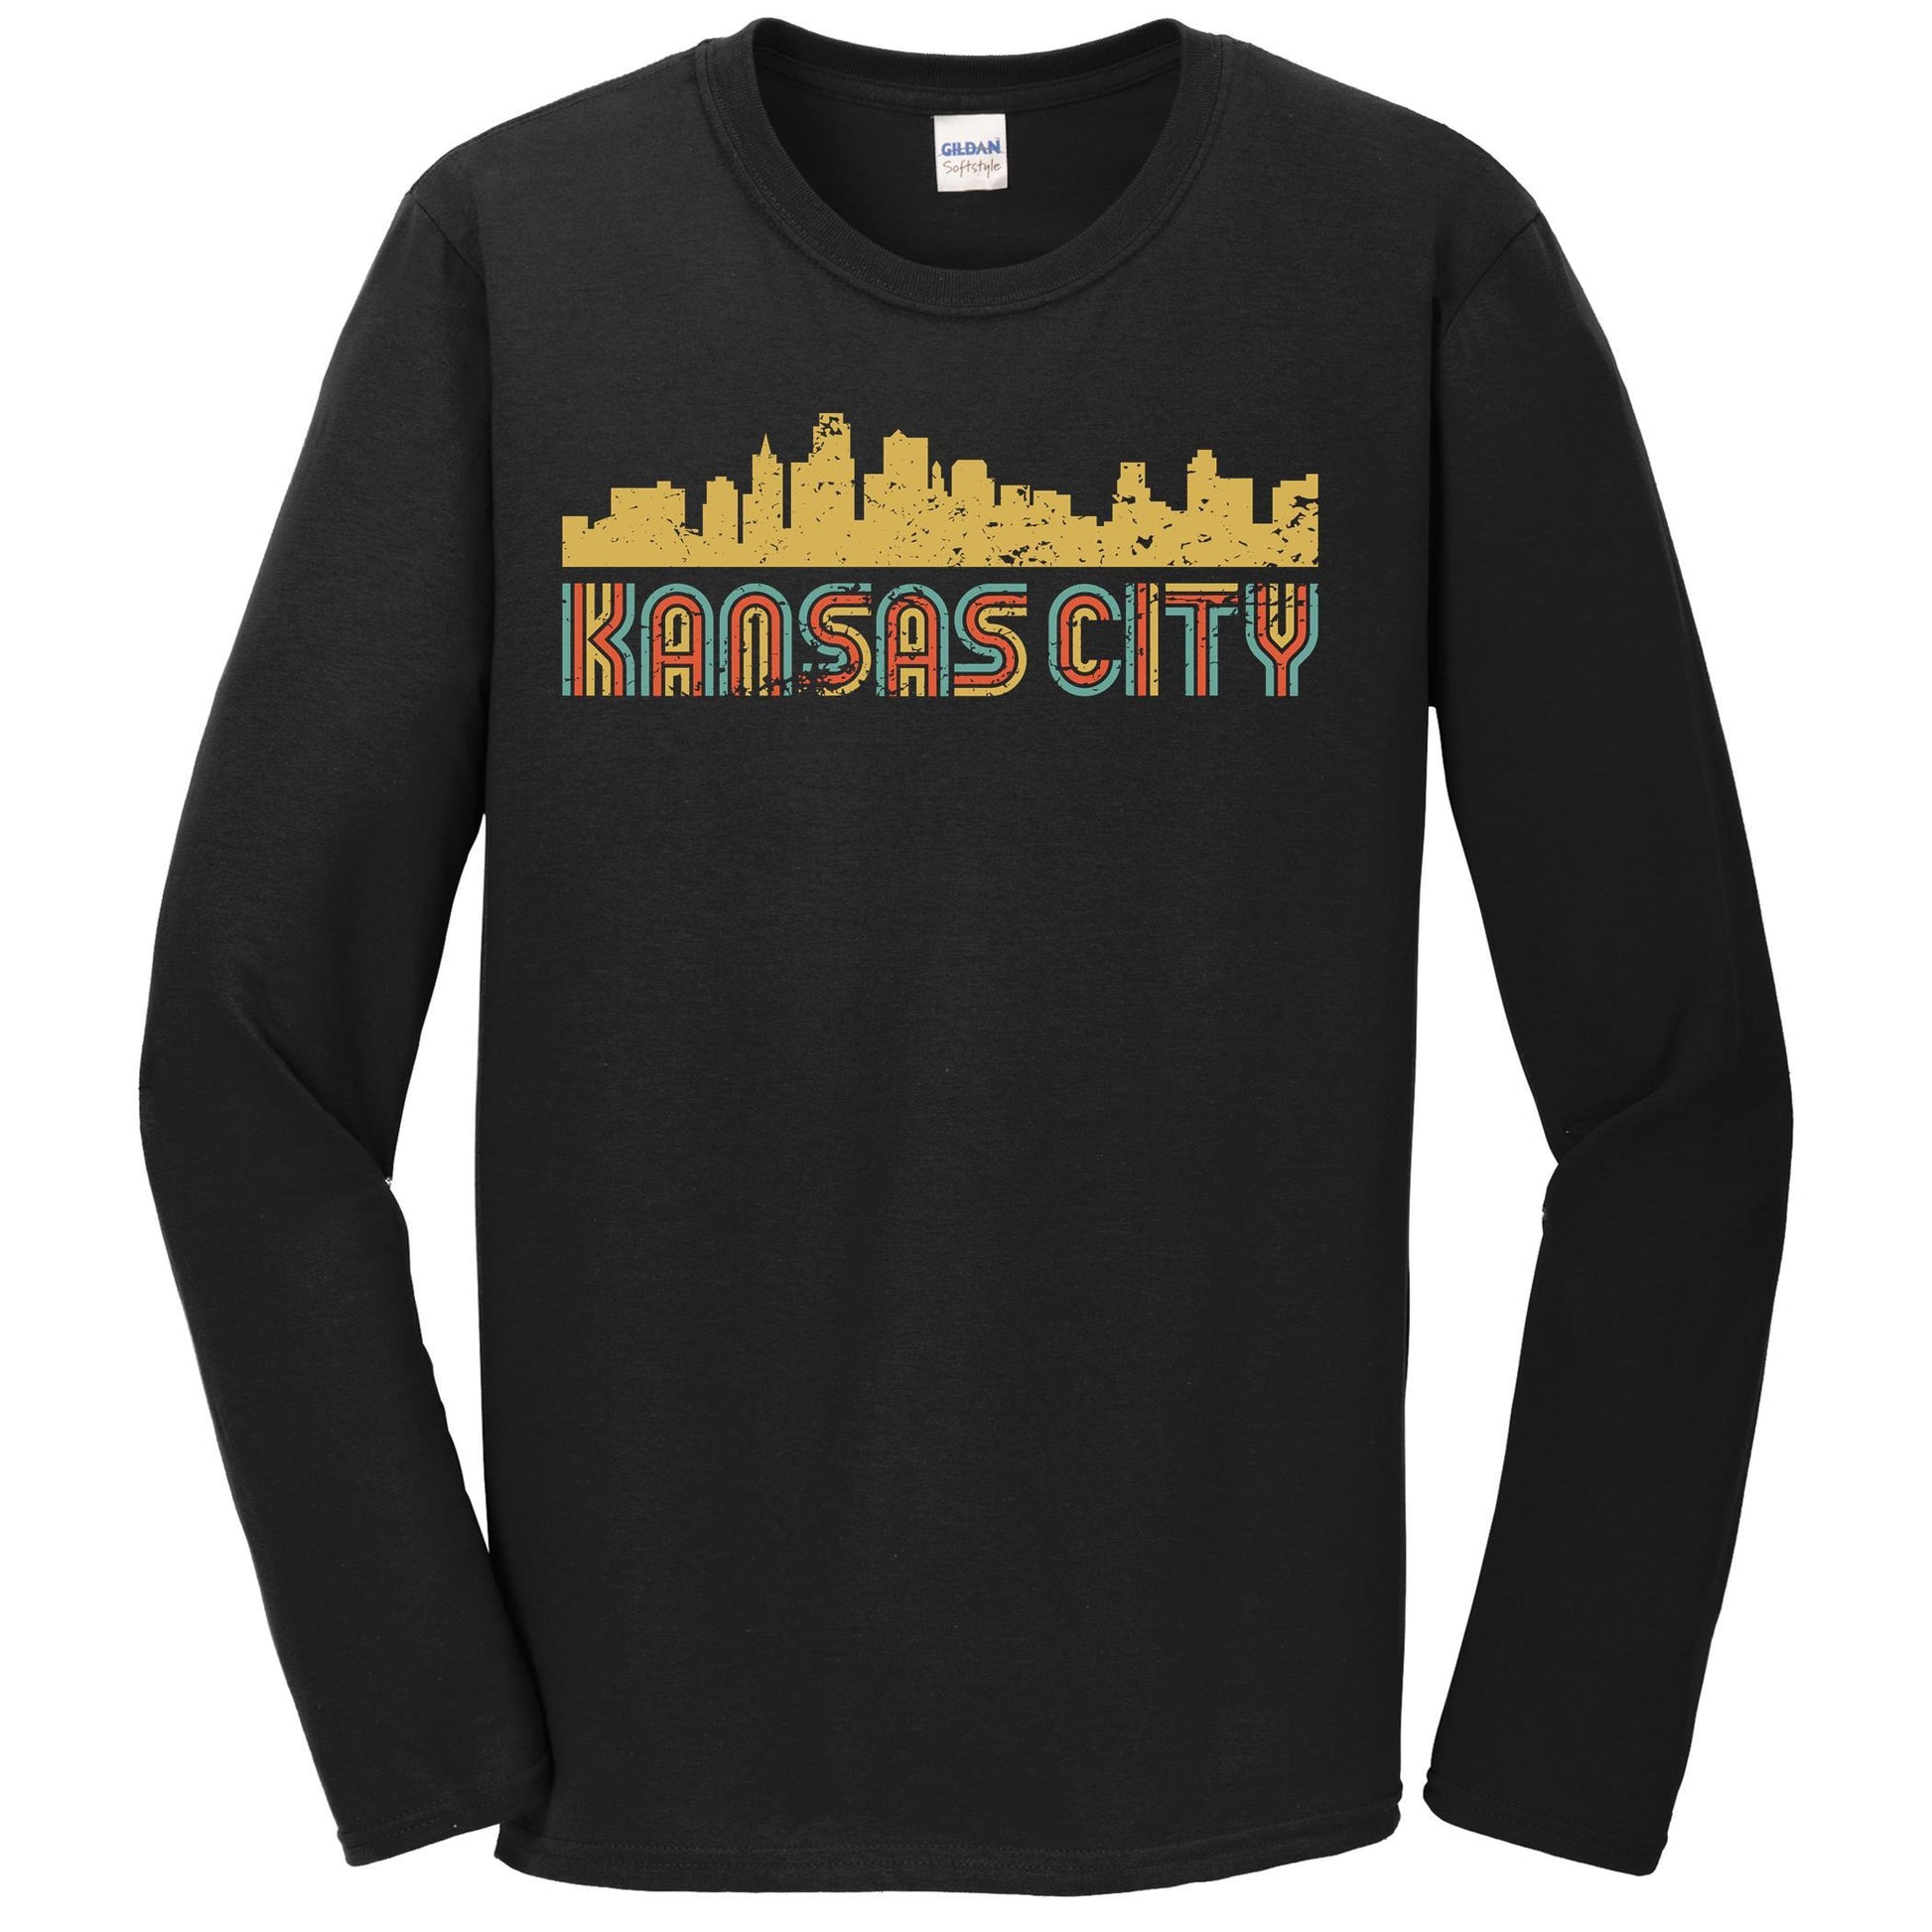 Kansas City Baseball Stadium T-Shirt ...